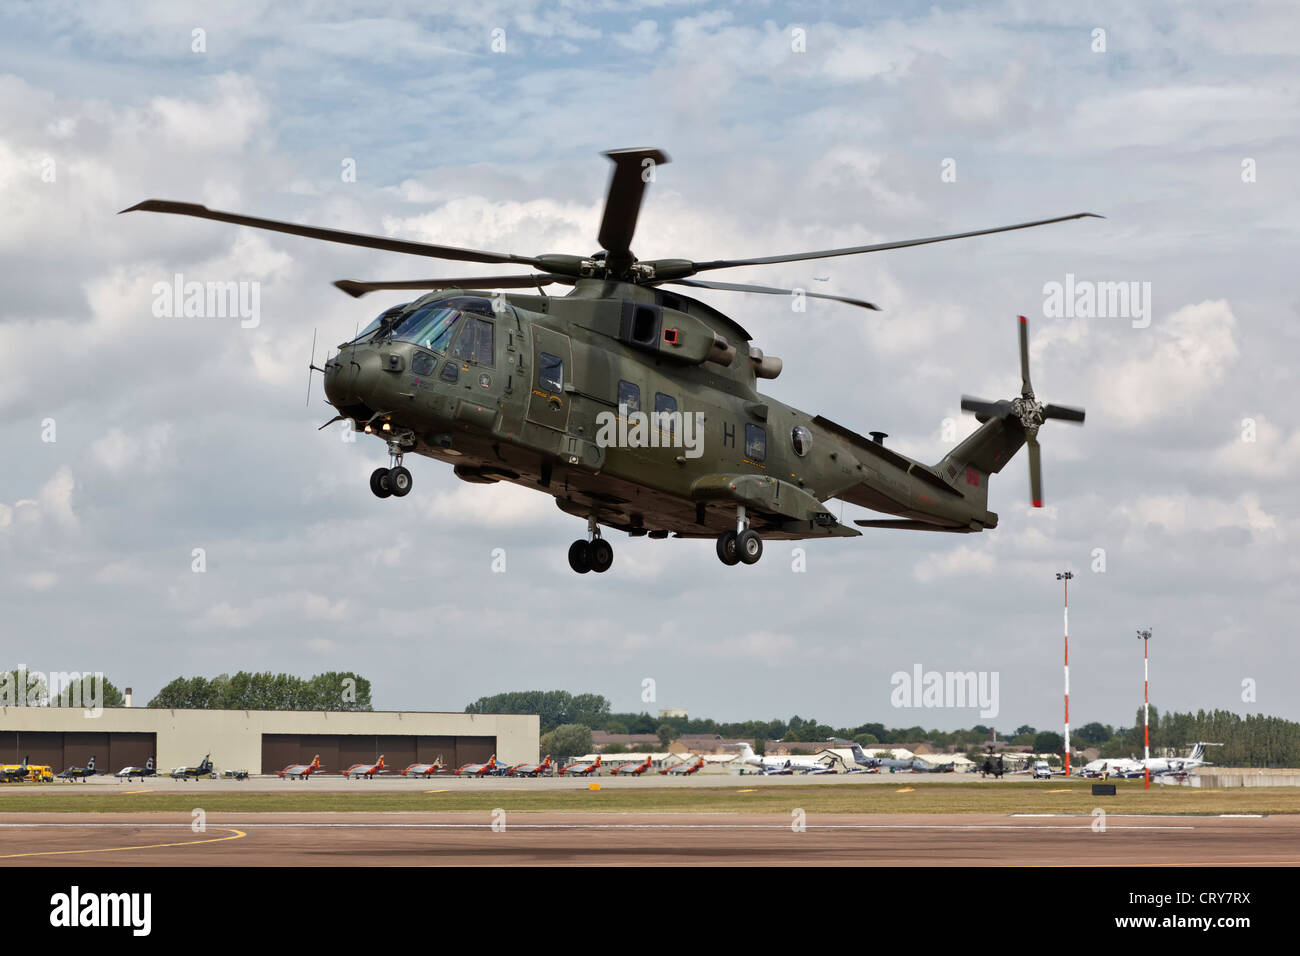 Augusta Westland Merlin elicottero della RAF Foto Stock